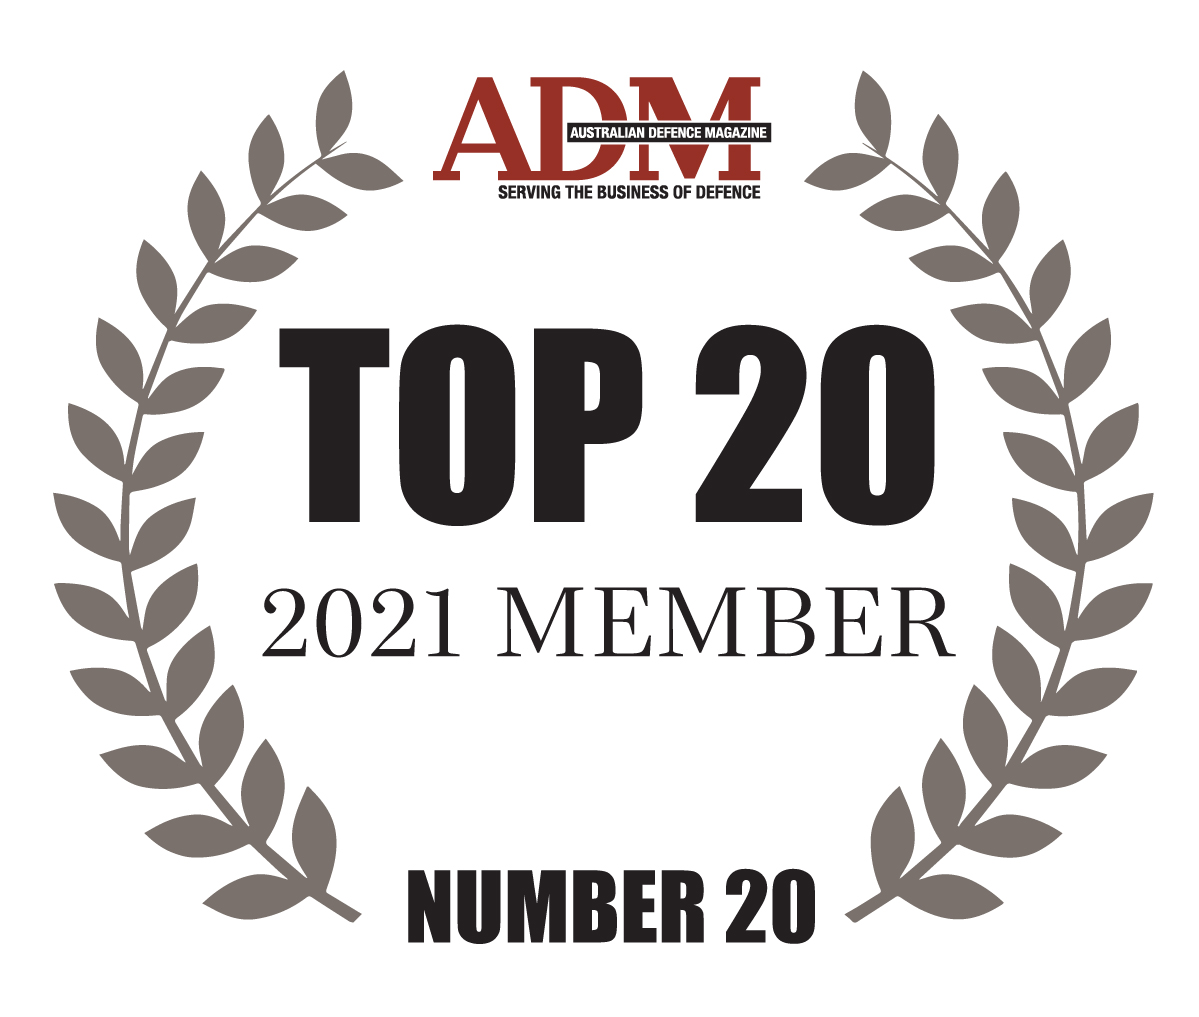 ADM’s Top 20 SMEs 2021